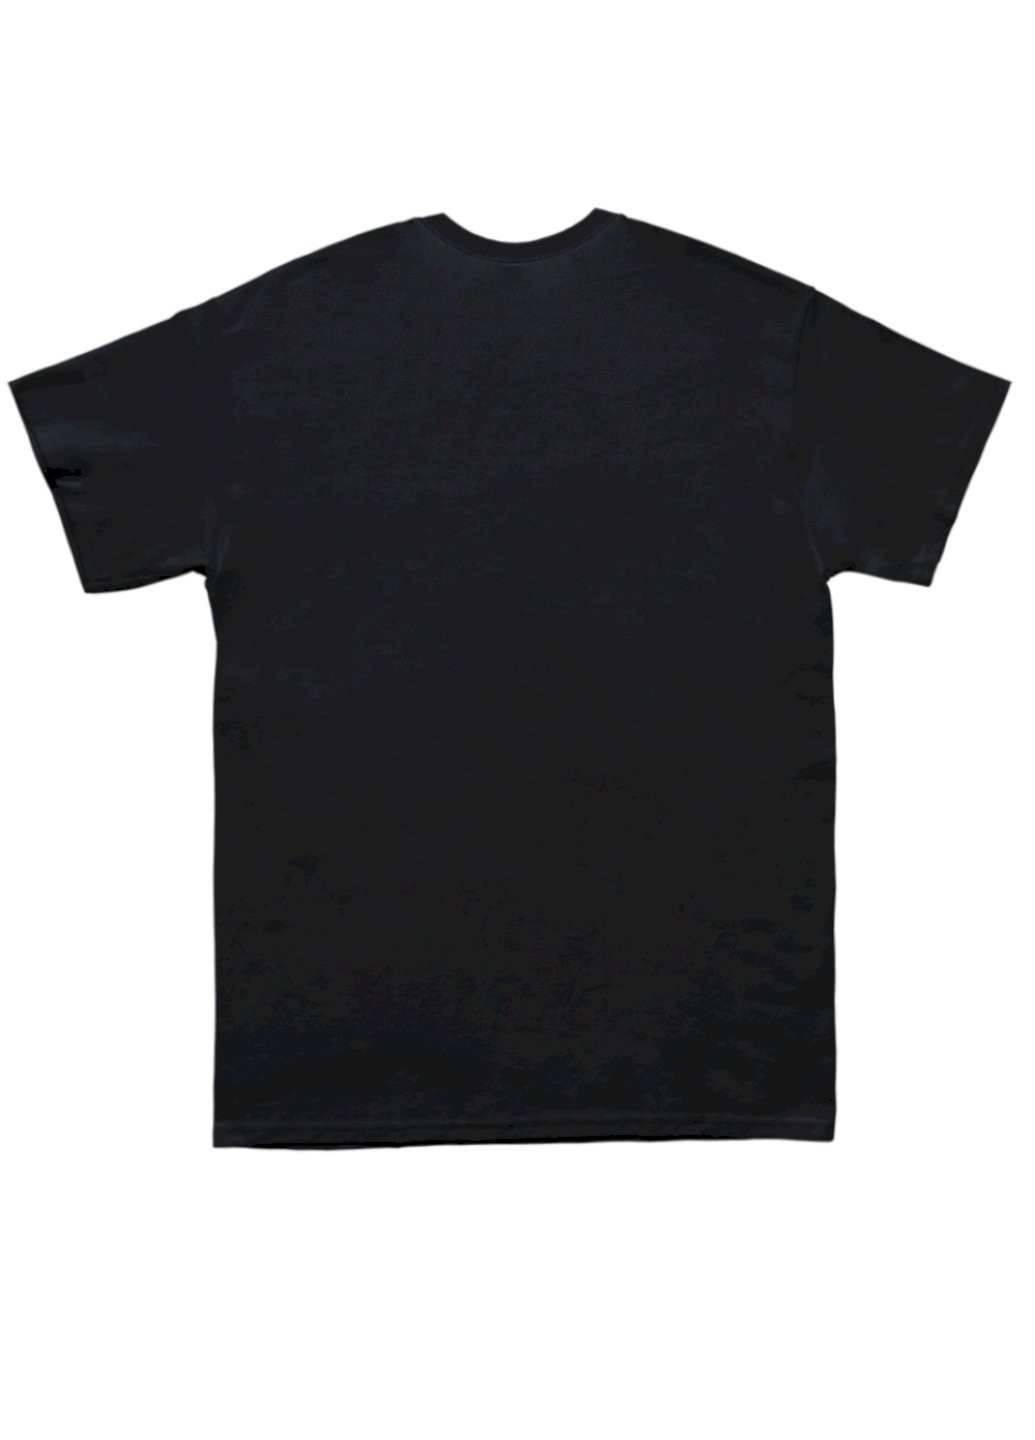 Черная футболка мужская черная "go_home" Trace of Space